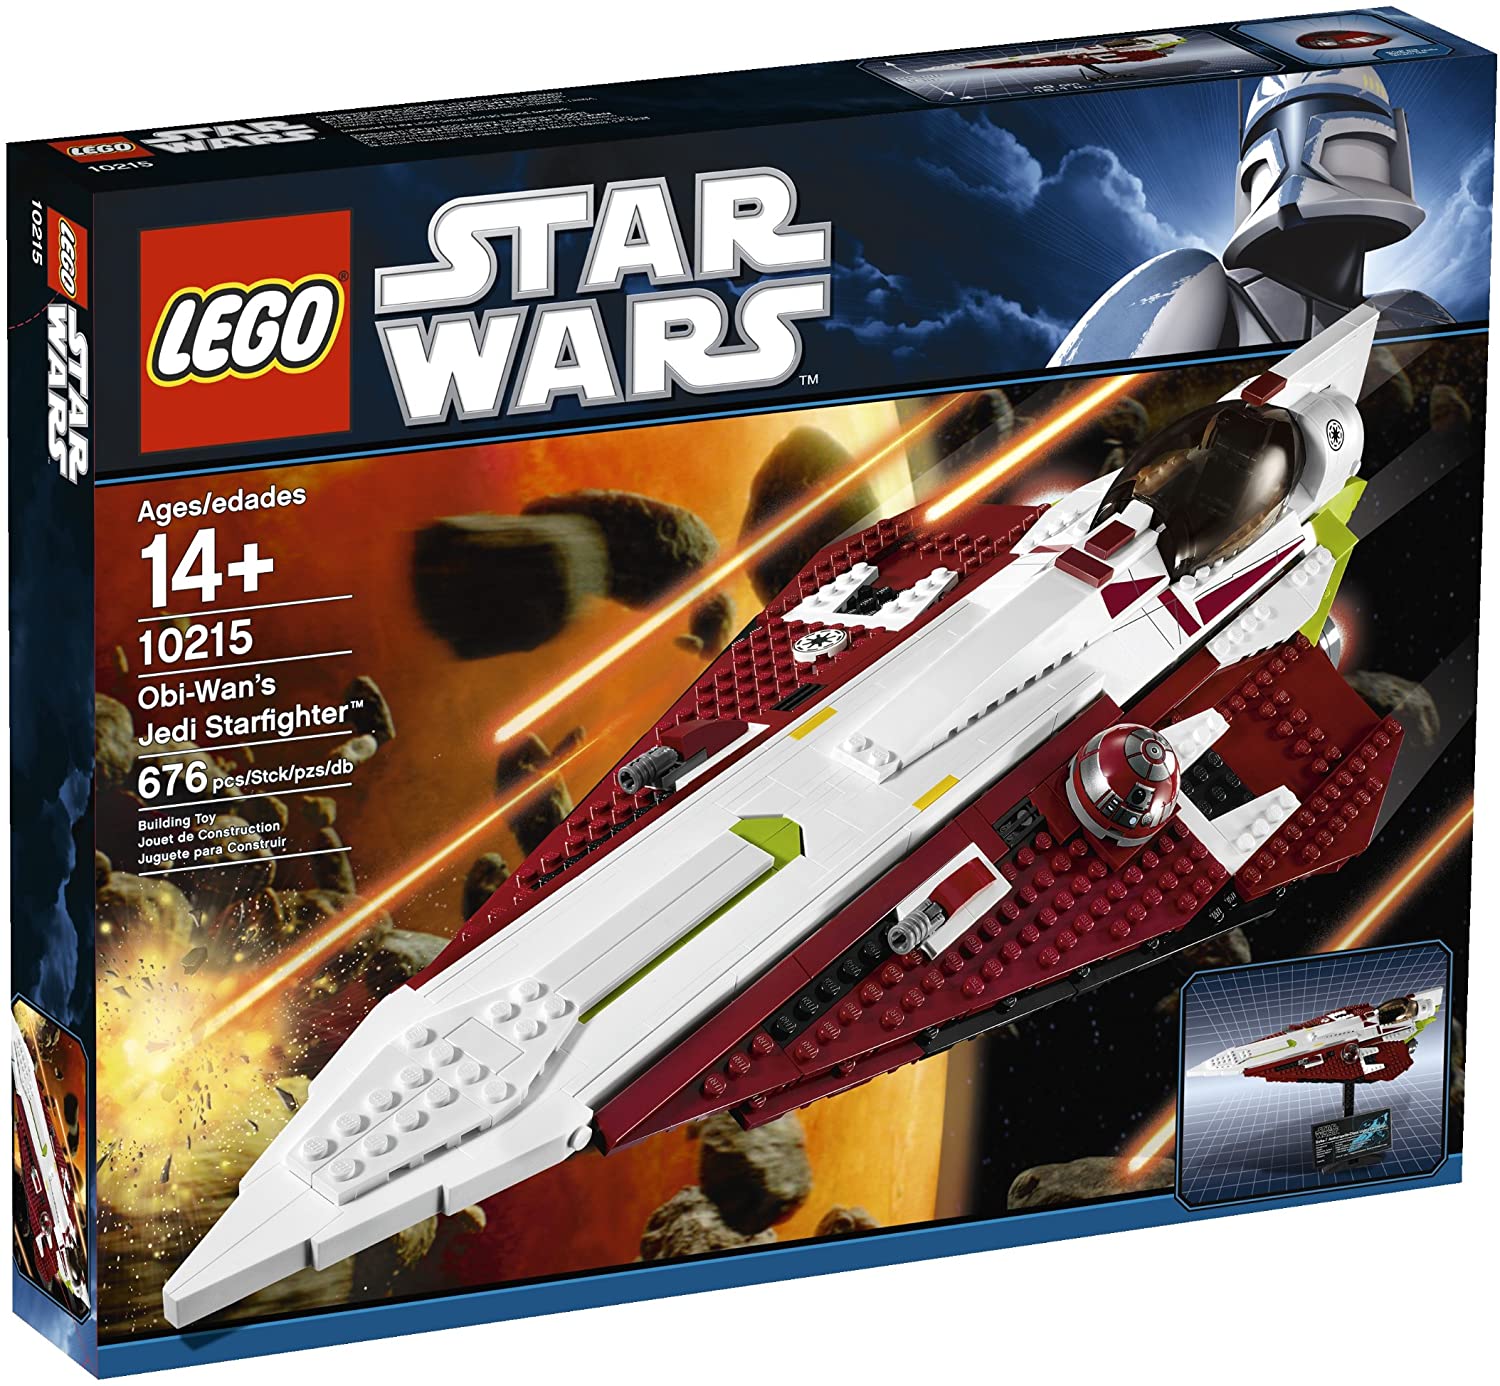 Human Terapi diktator LEGO Star Wars Ultimate Collector Series Collector's Guide